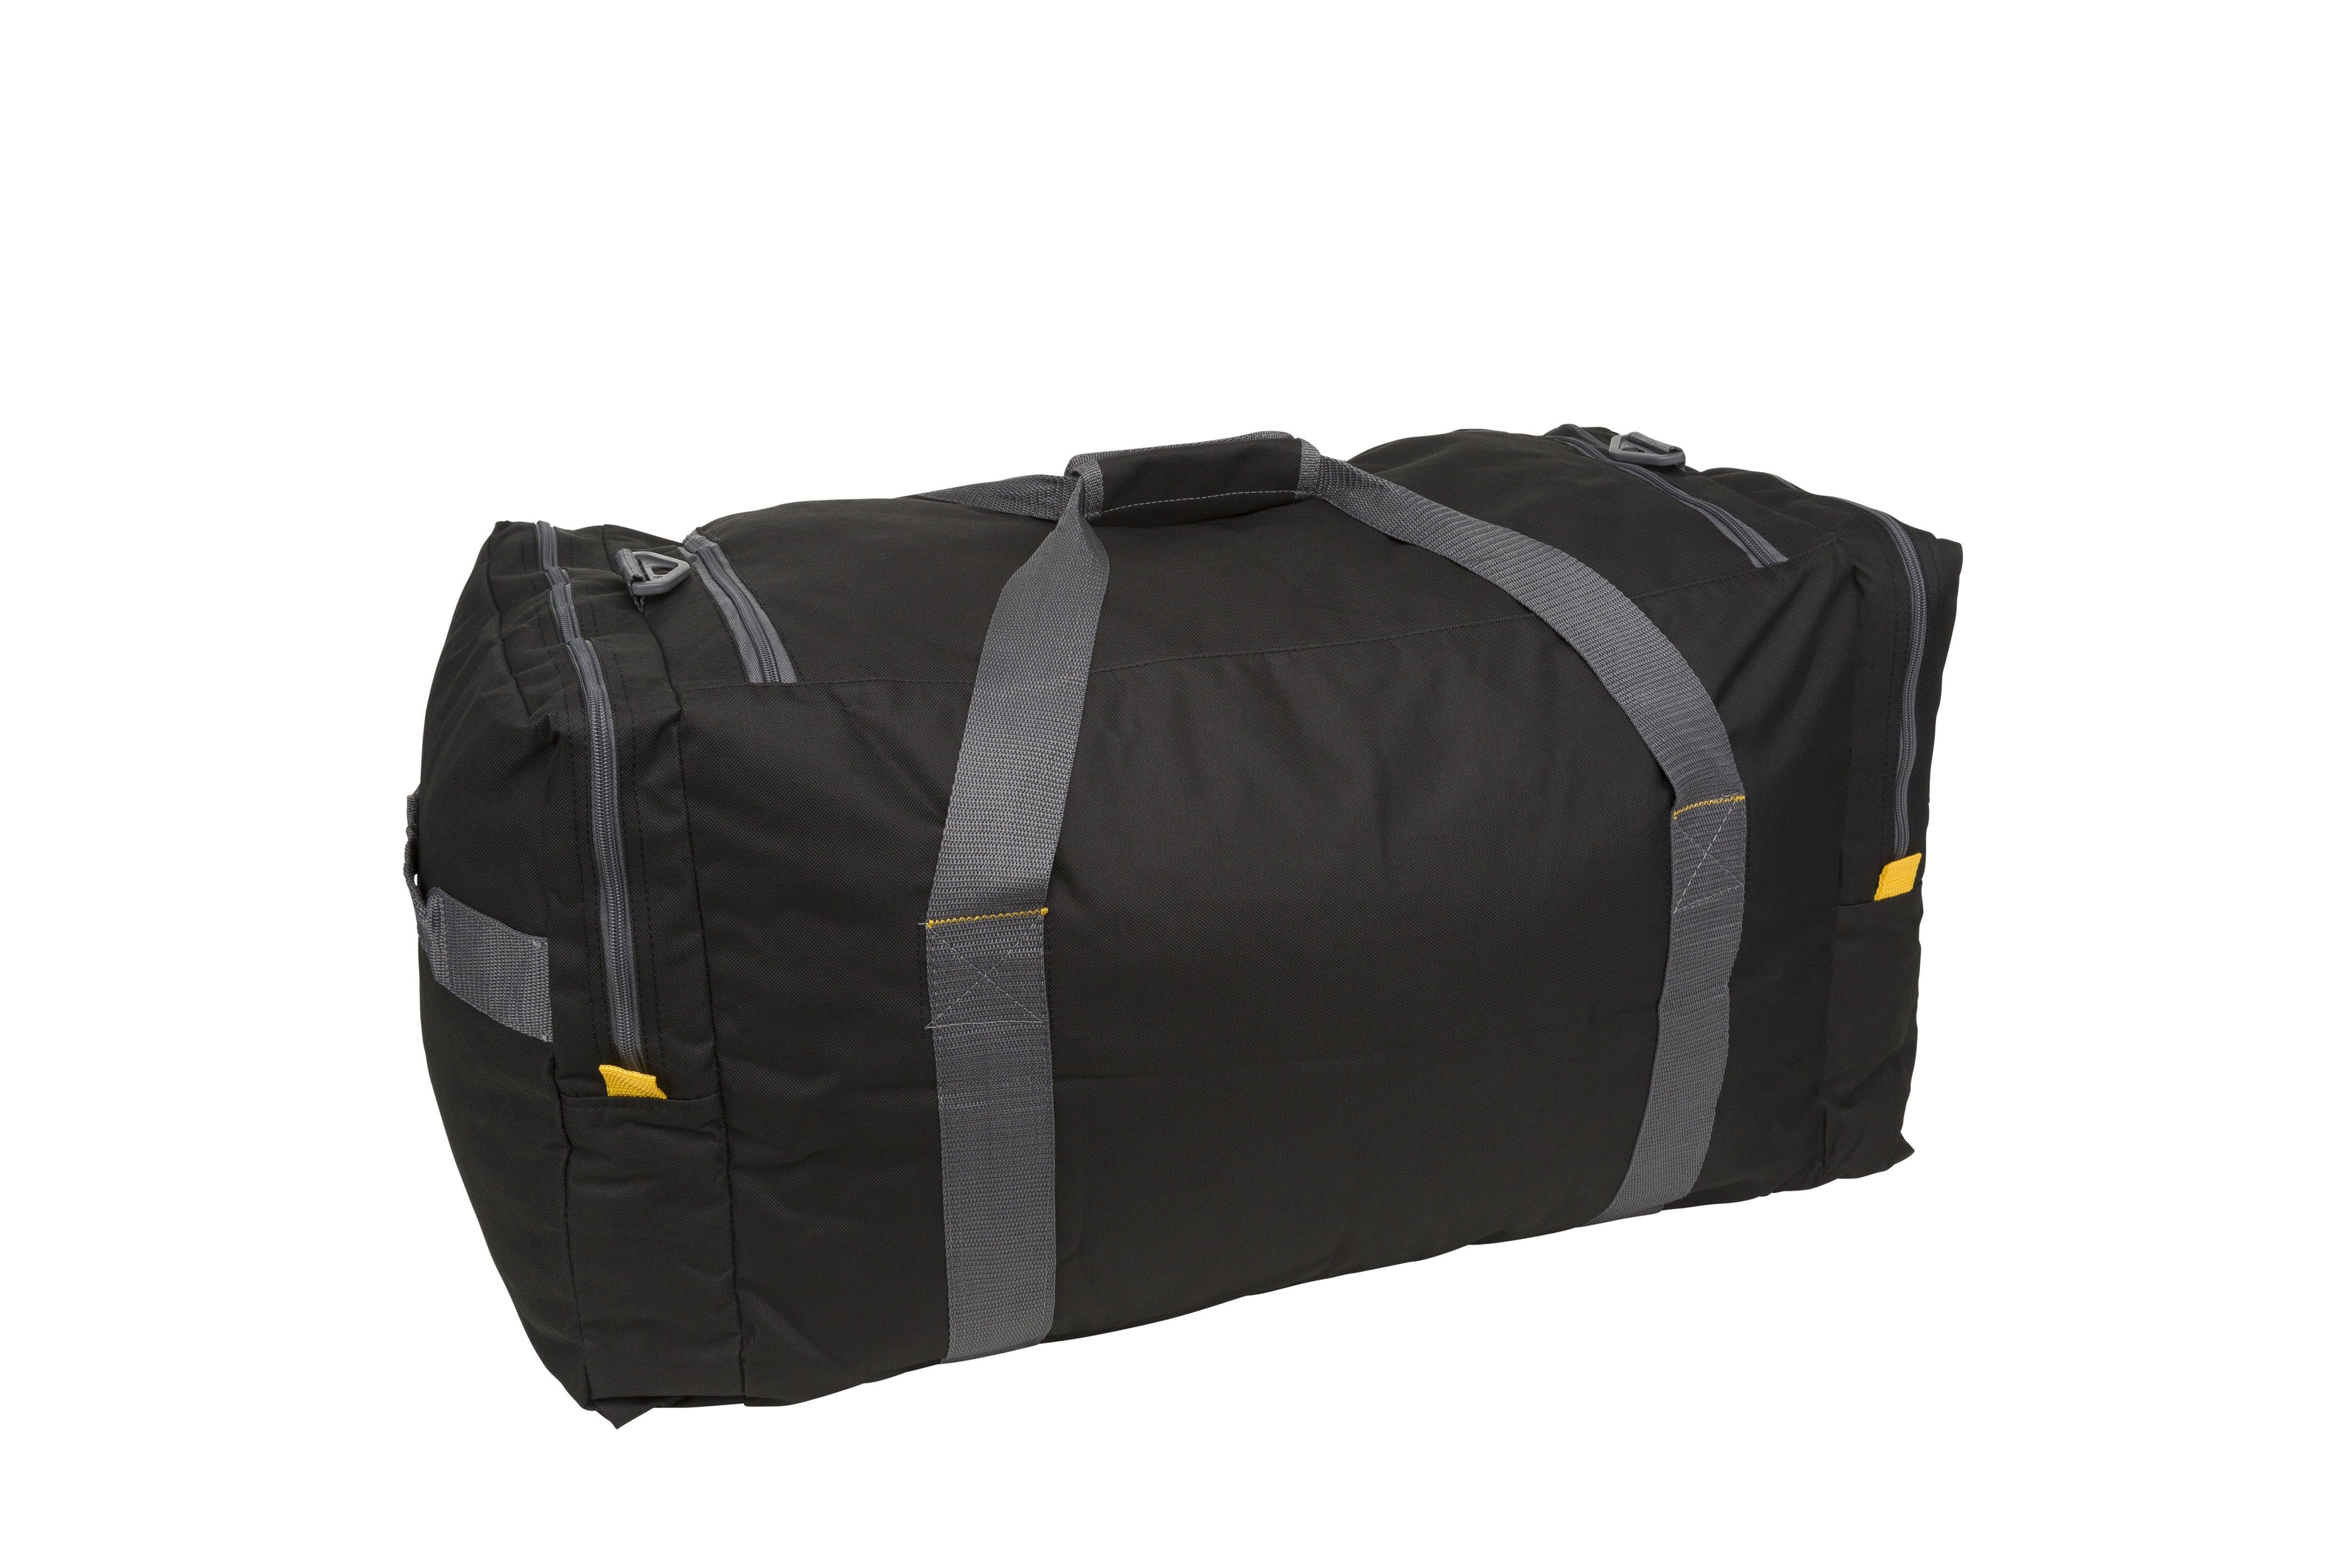 Travel Duffle Bag,Foldable Extra Large Duffel Bags